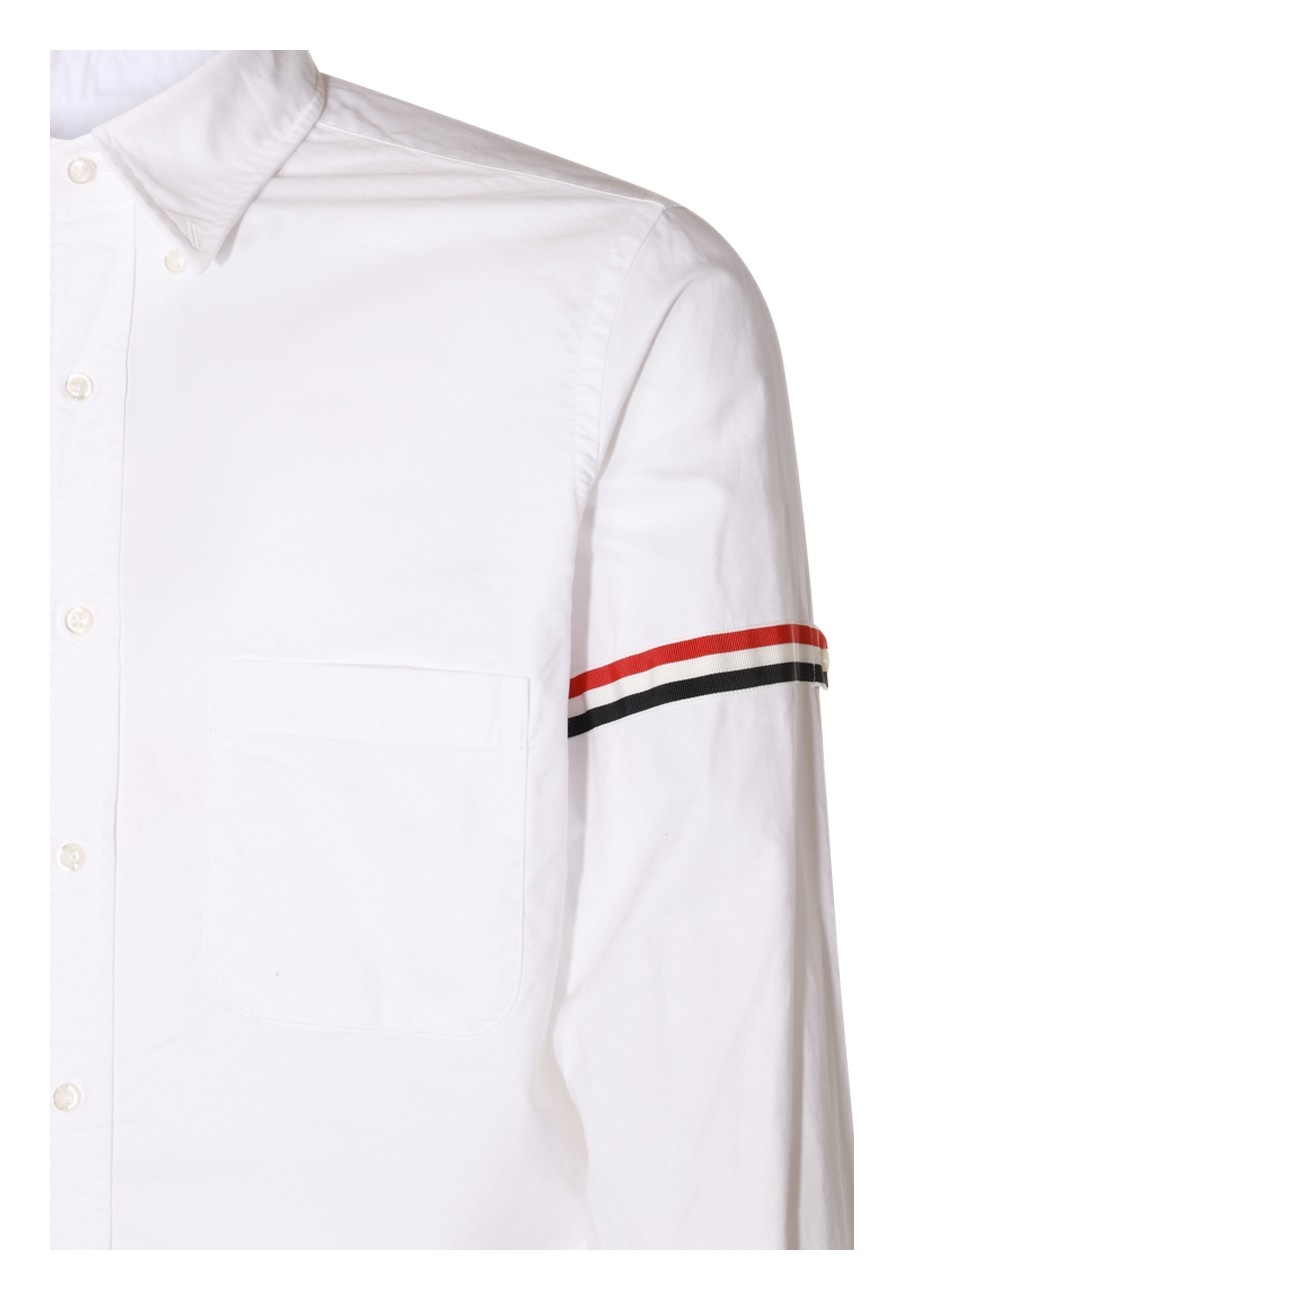 white cotton shirt - 3